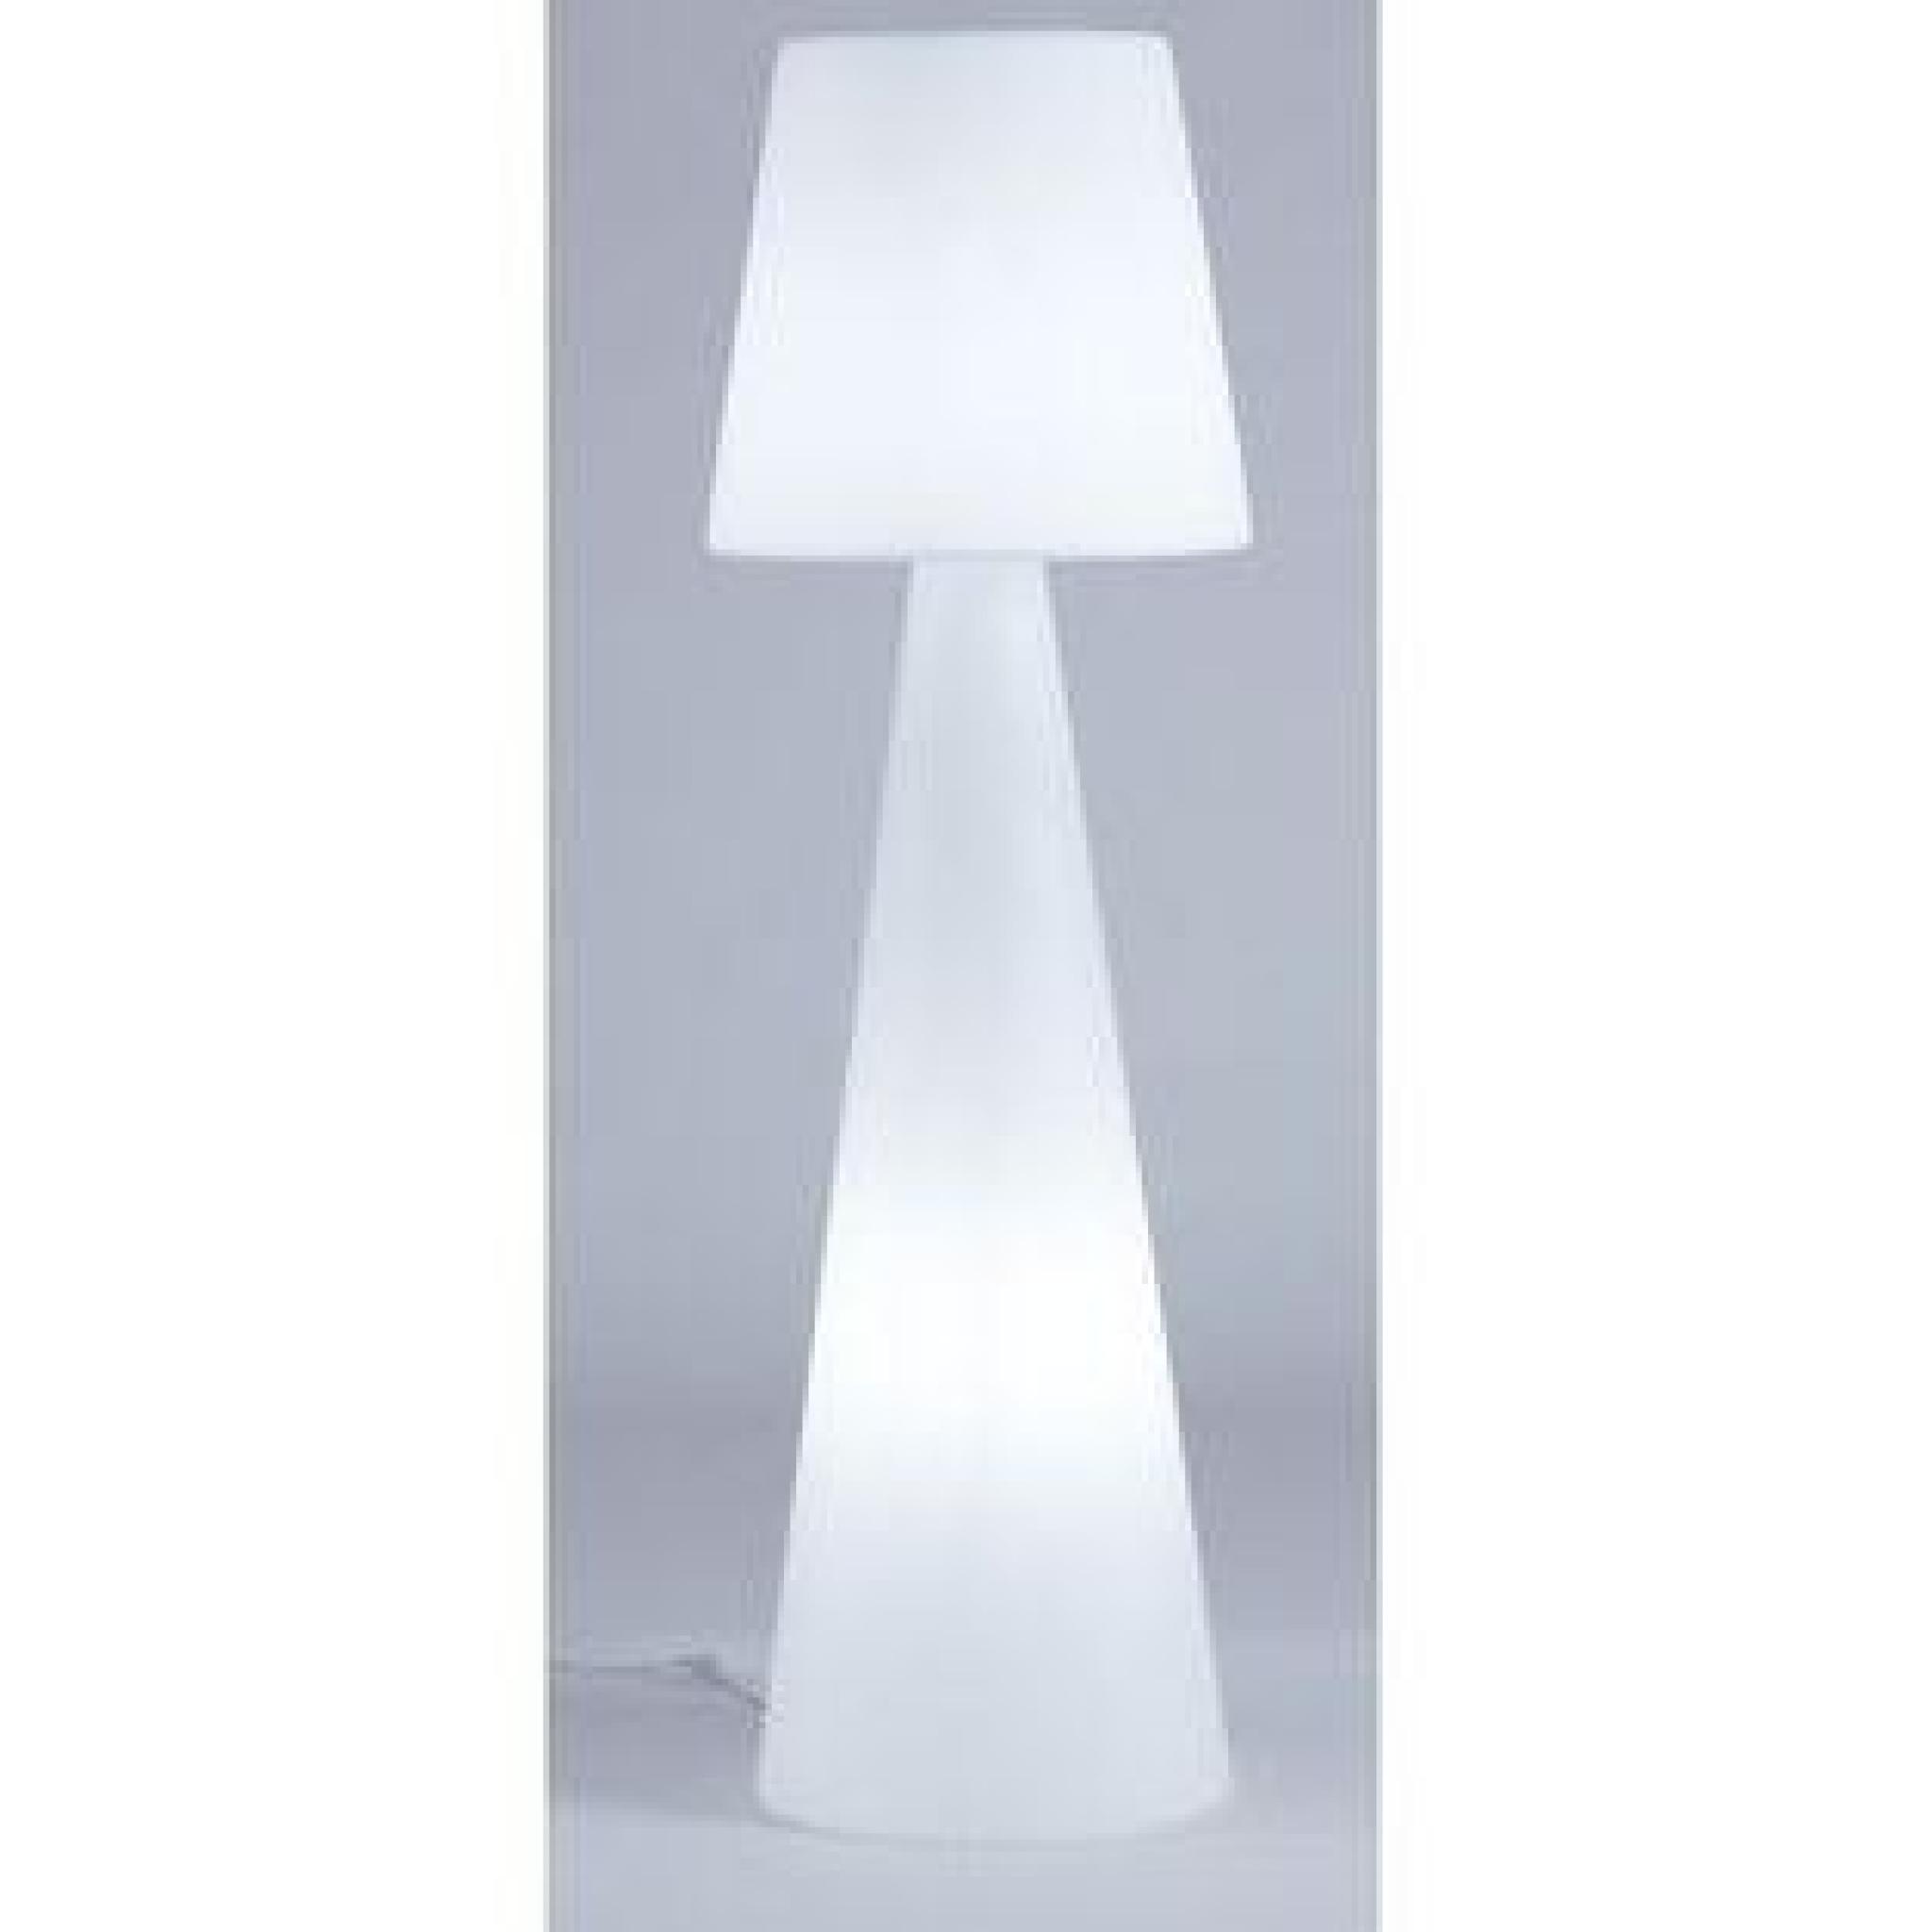 Lampe PIVOT Interieur diam.60 h200cm BLANC Slide